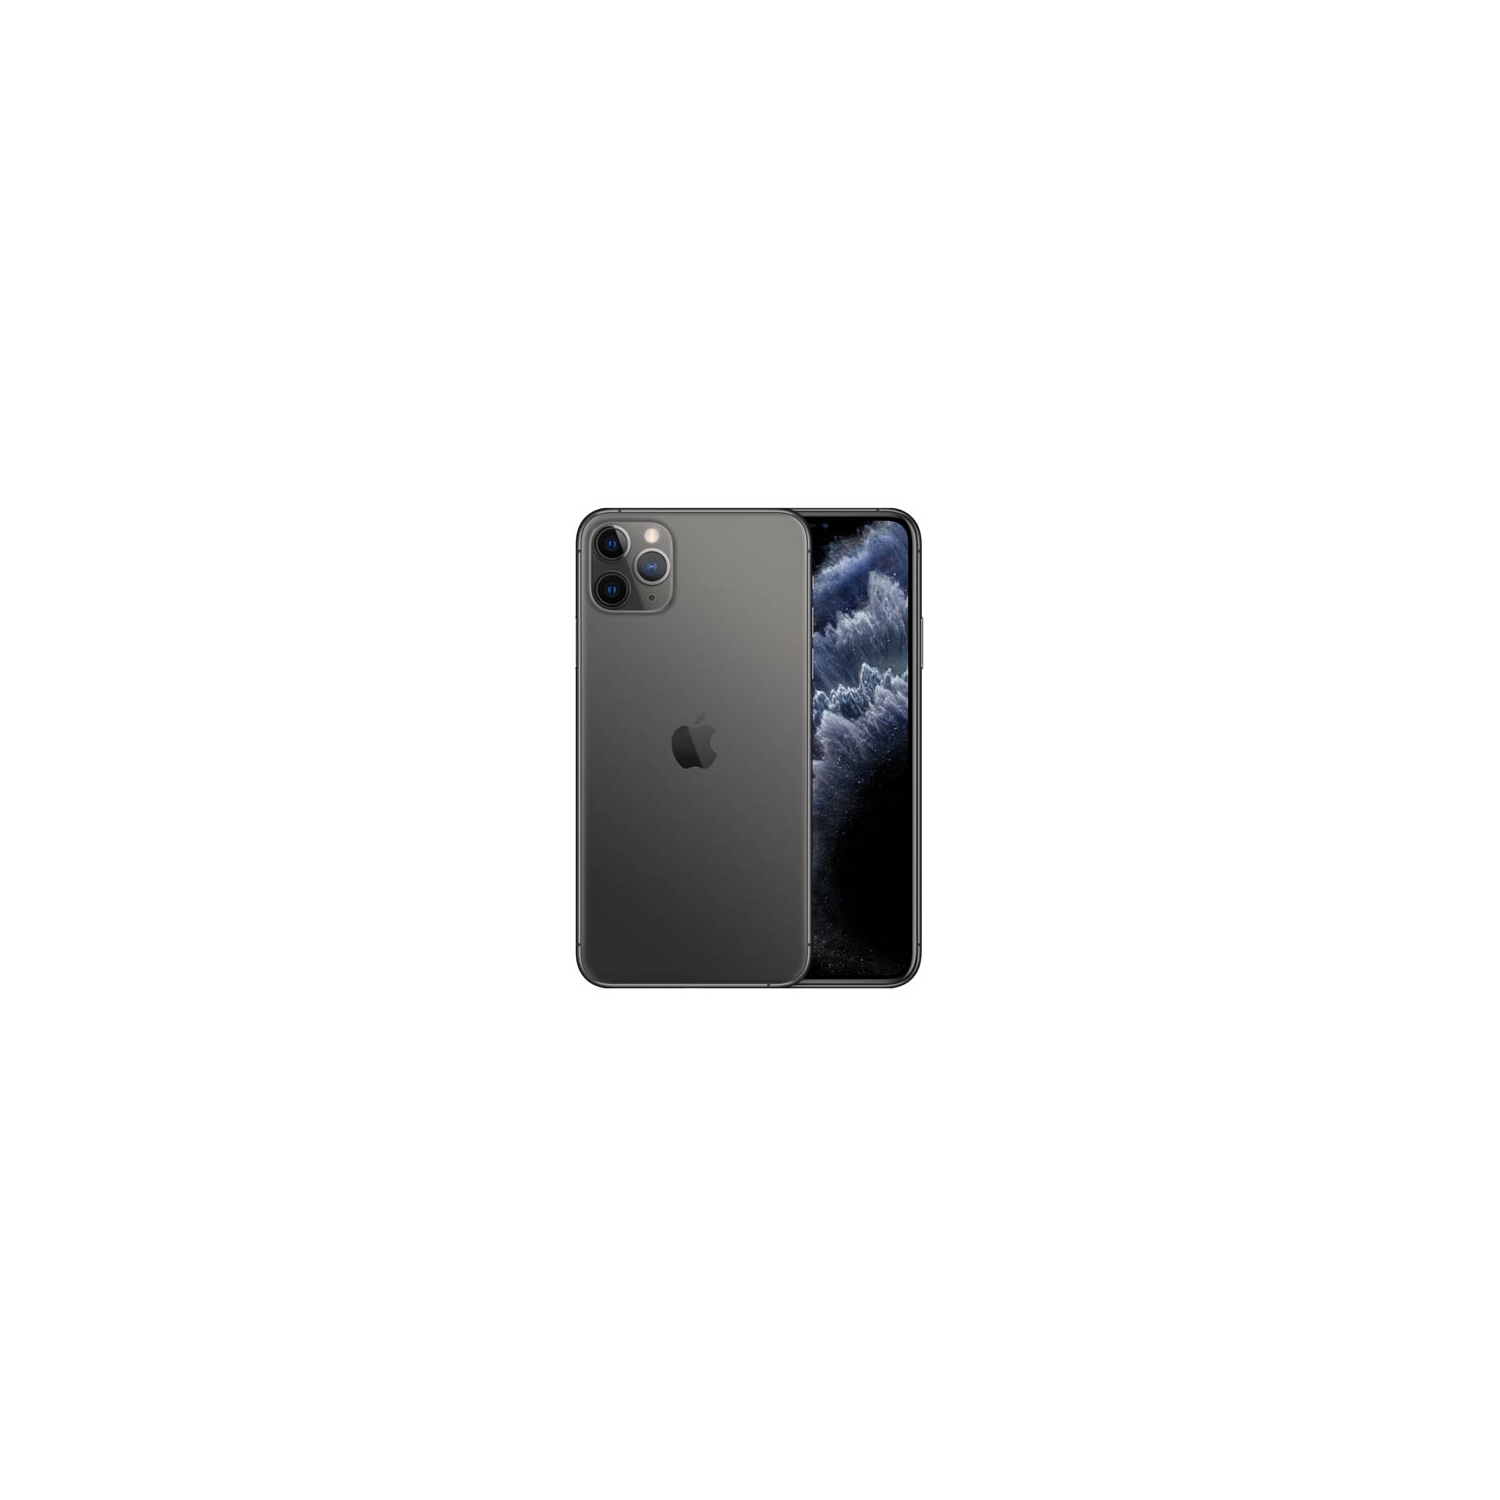 Refurbished (Good) - Apple iPhone 11 Pro Max 256GB Smartphone - Space Gray - Unlocked